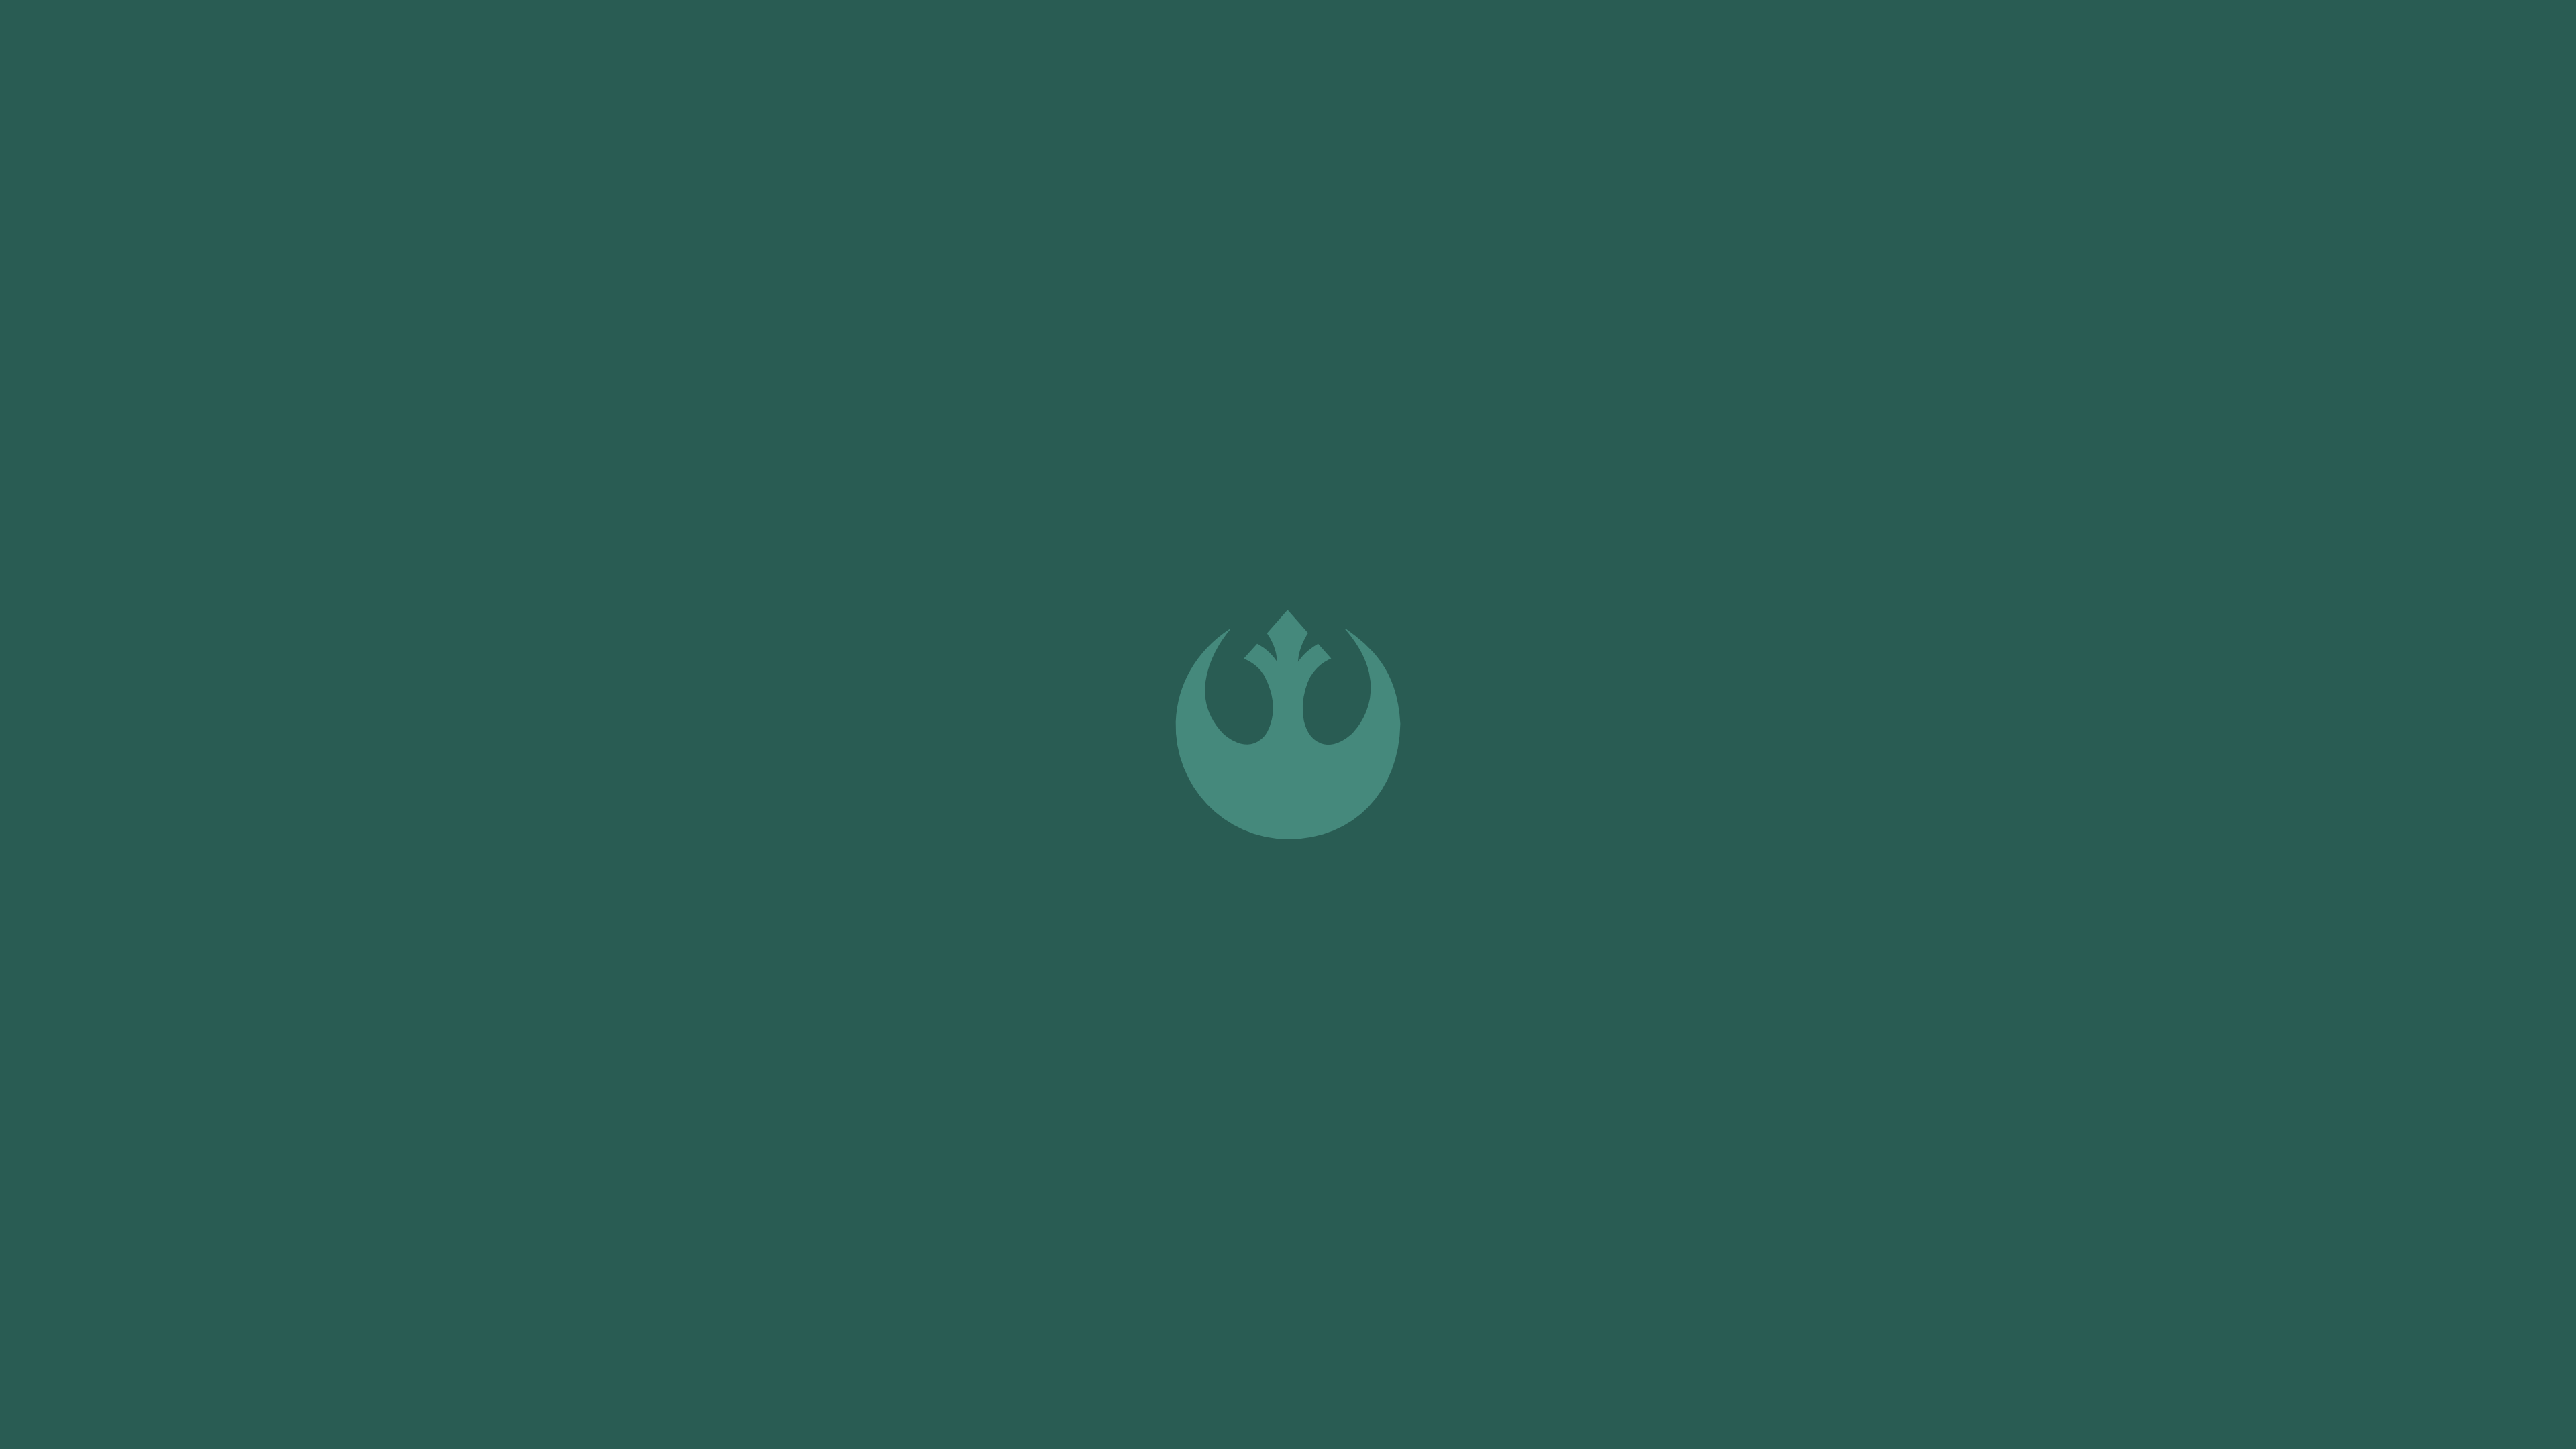 Star Wars Rebel Alliance Minimalism 3840x2160